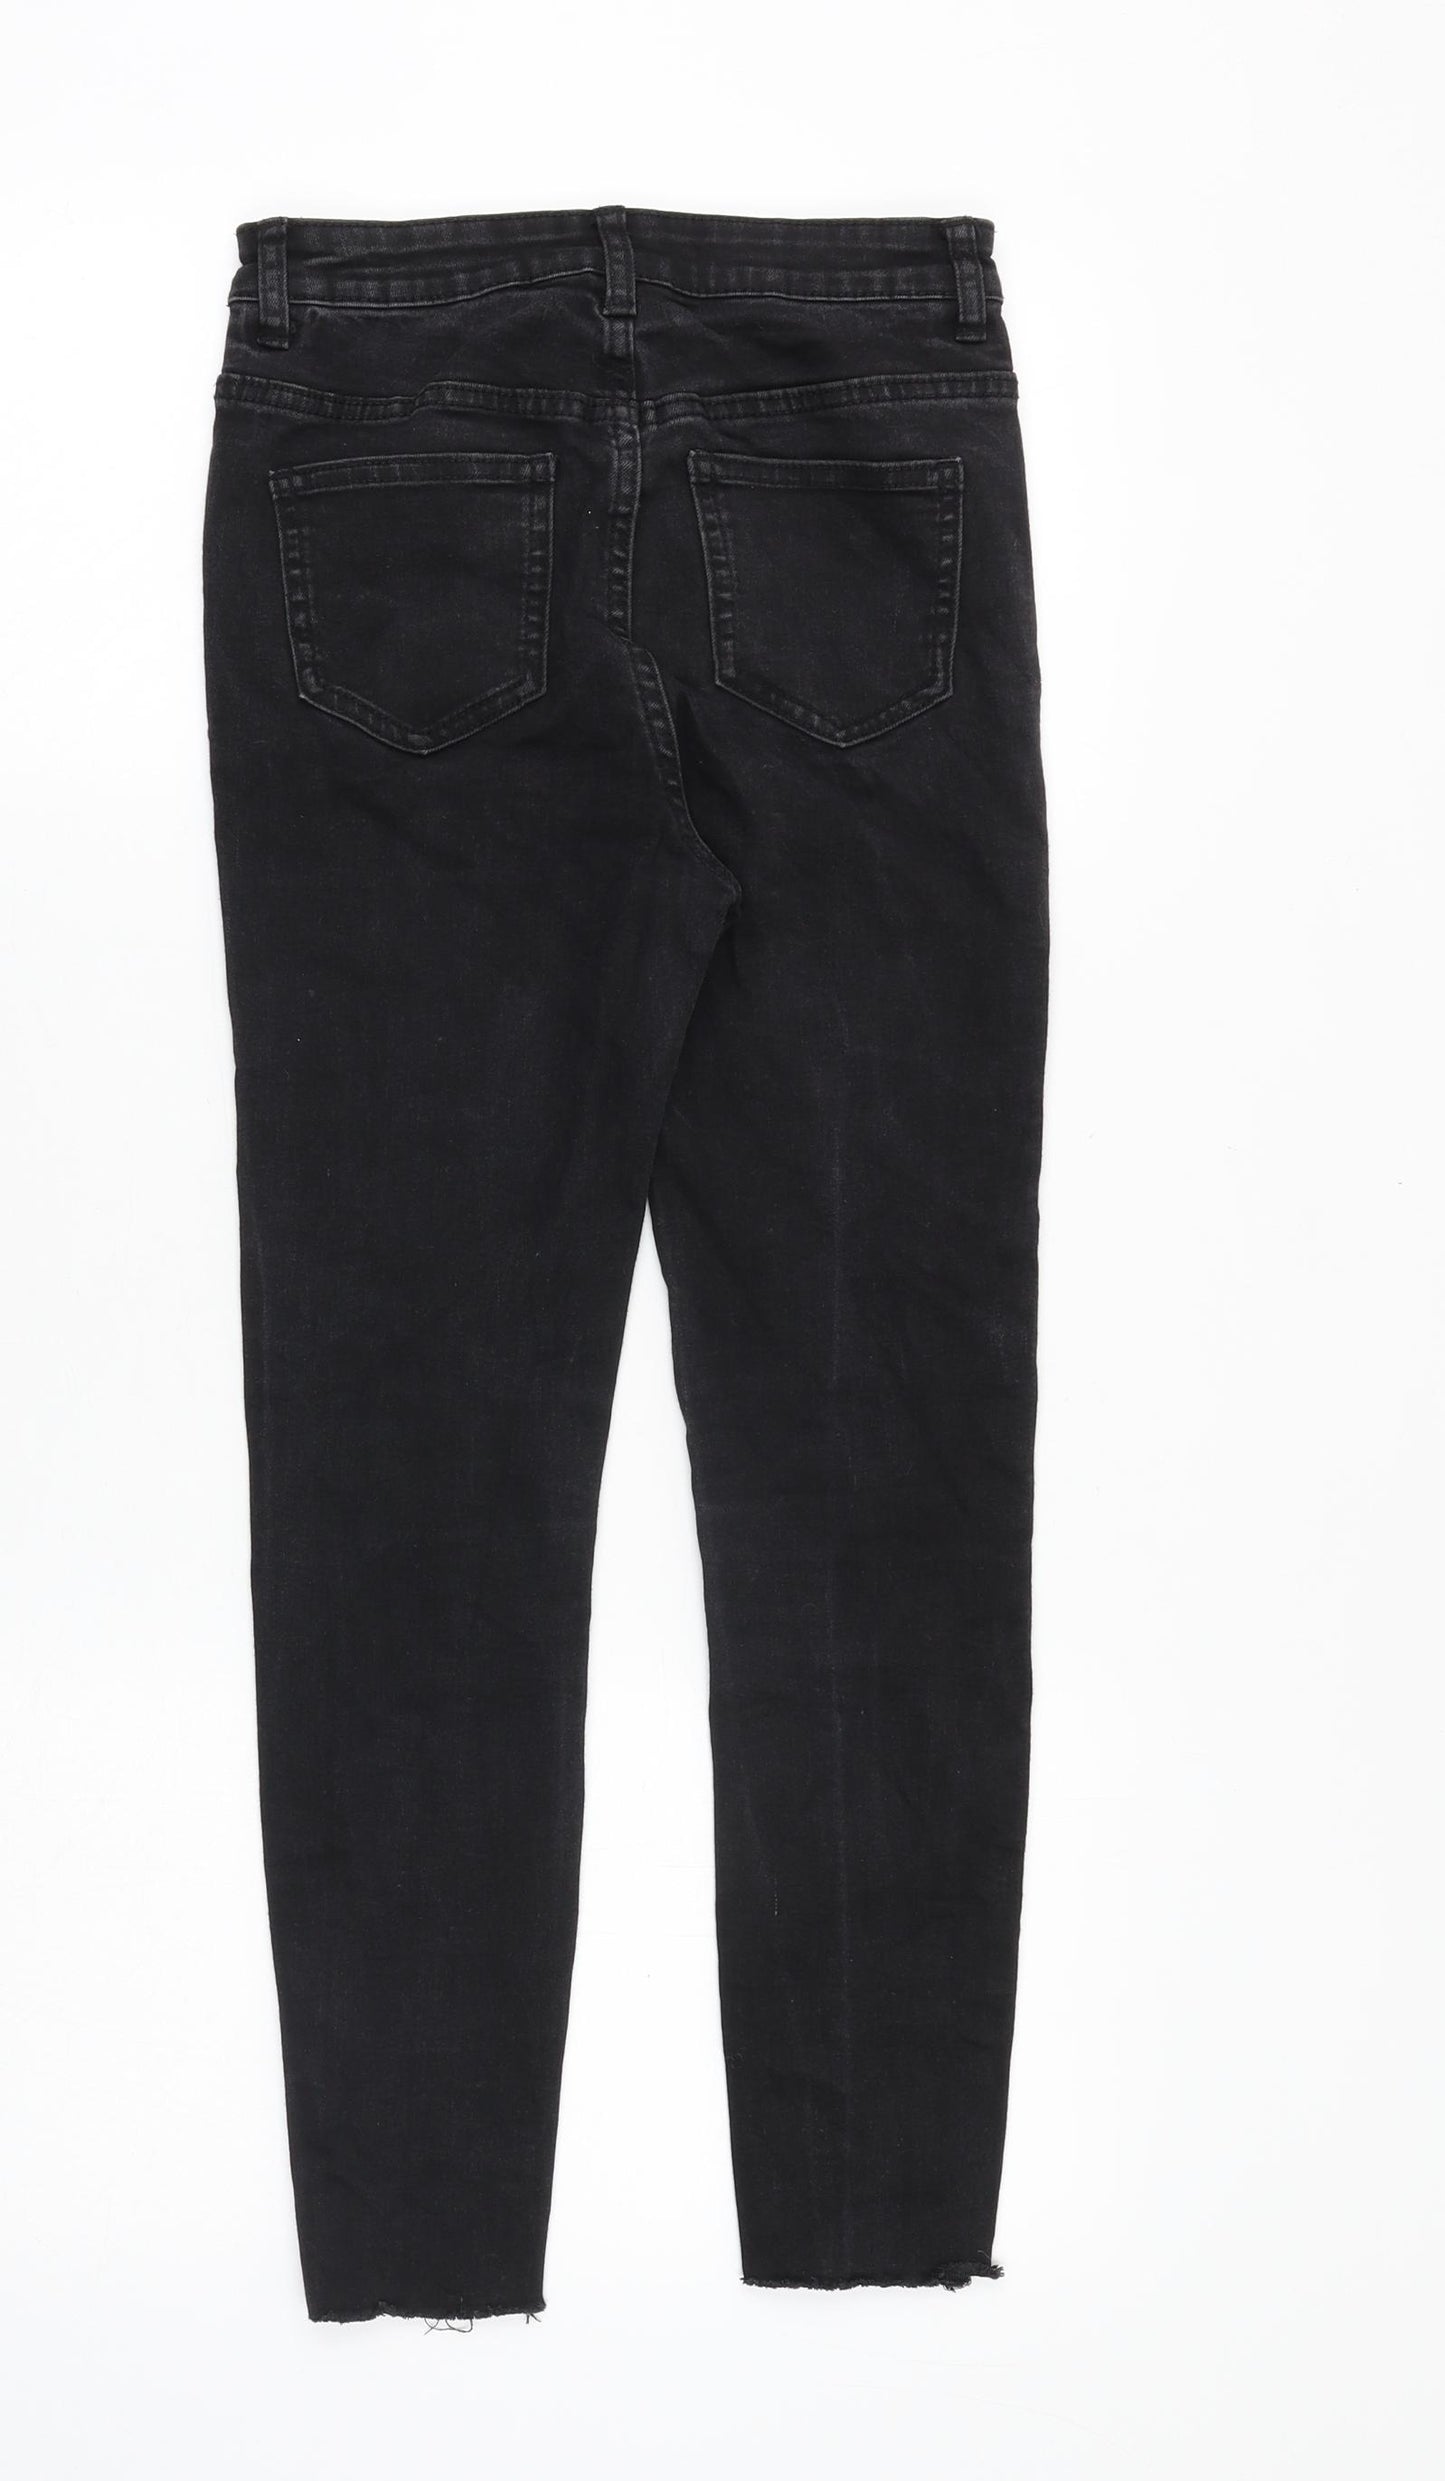 George Girls Black Cotton Skinny Jeans Size 11-12 Years Regular Zip